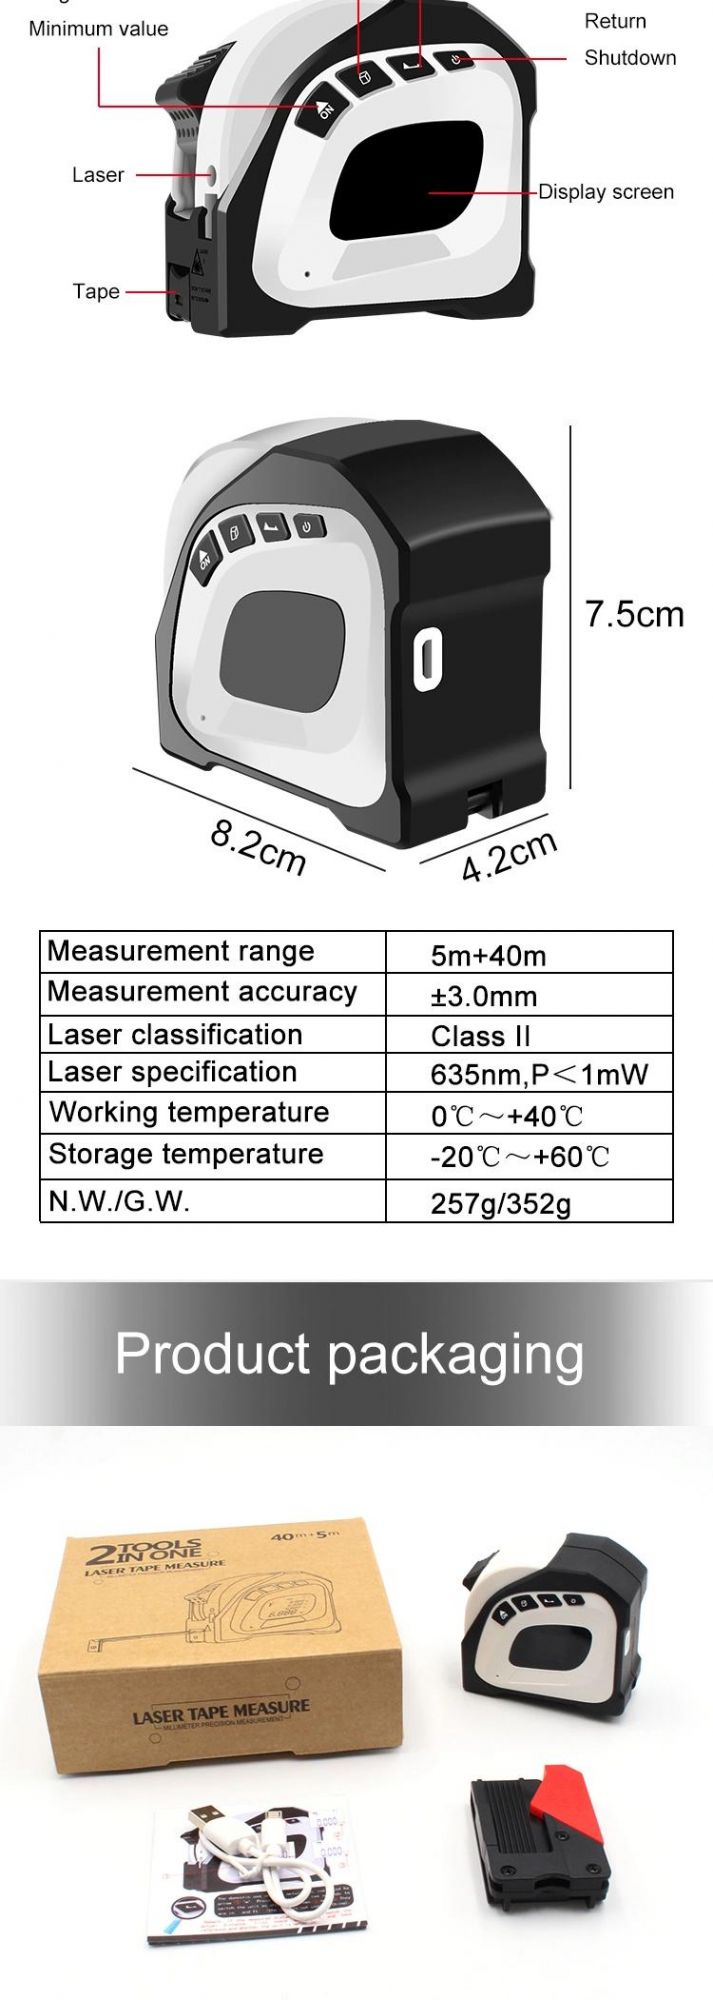 40m Laser Measure Tape Beam 30 FT Measuring Distance